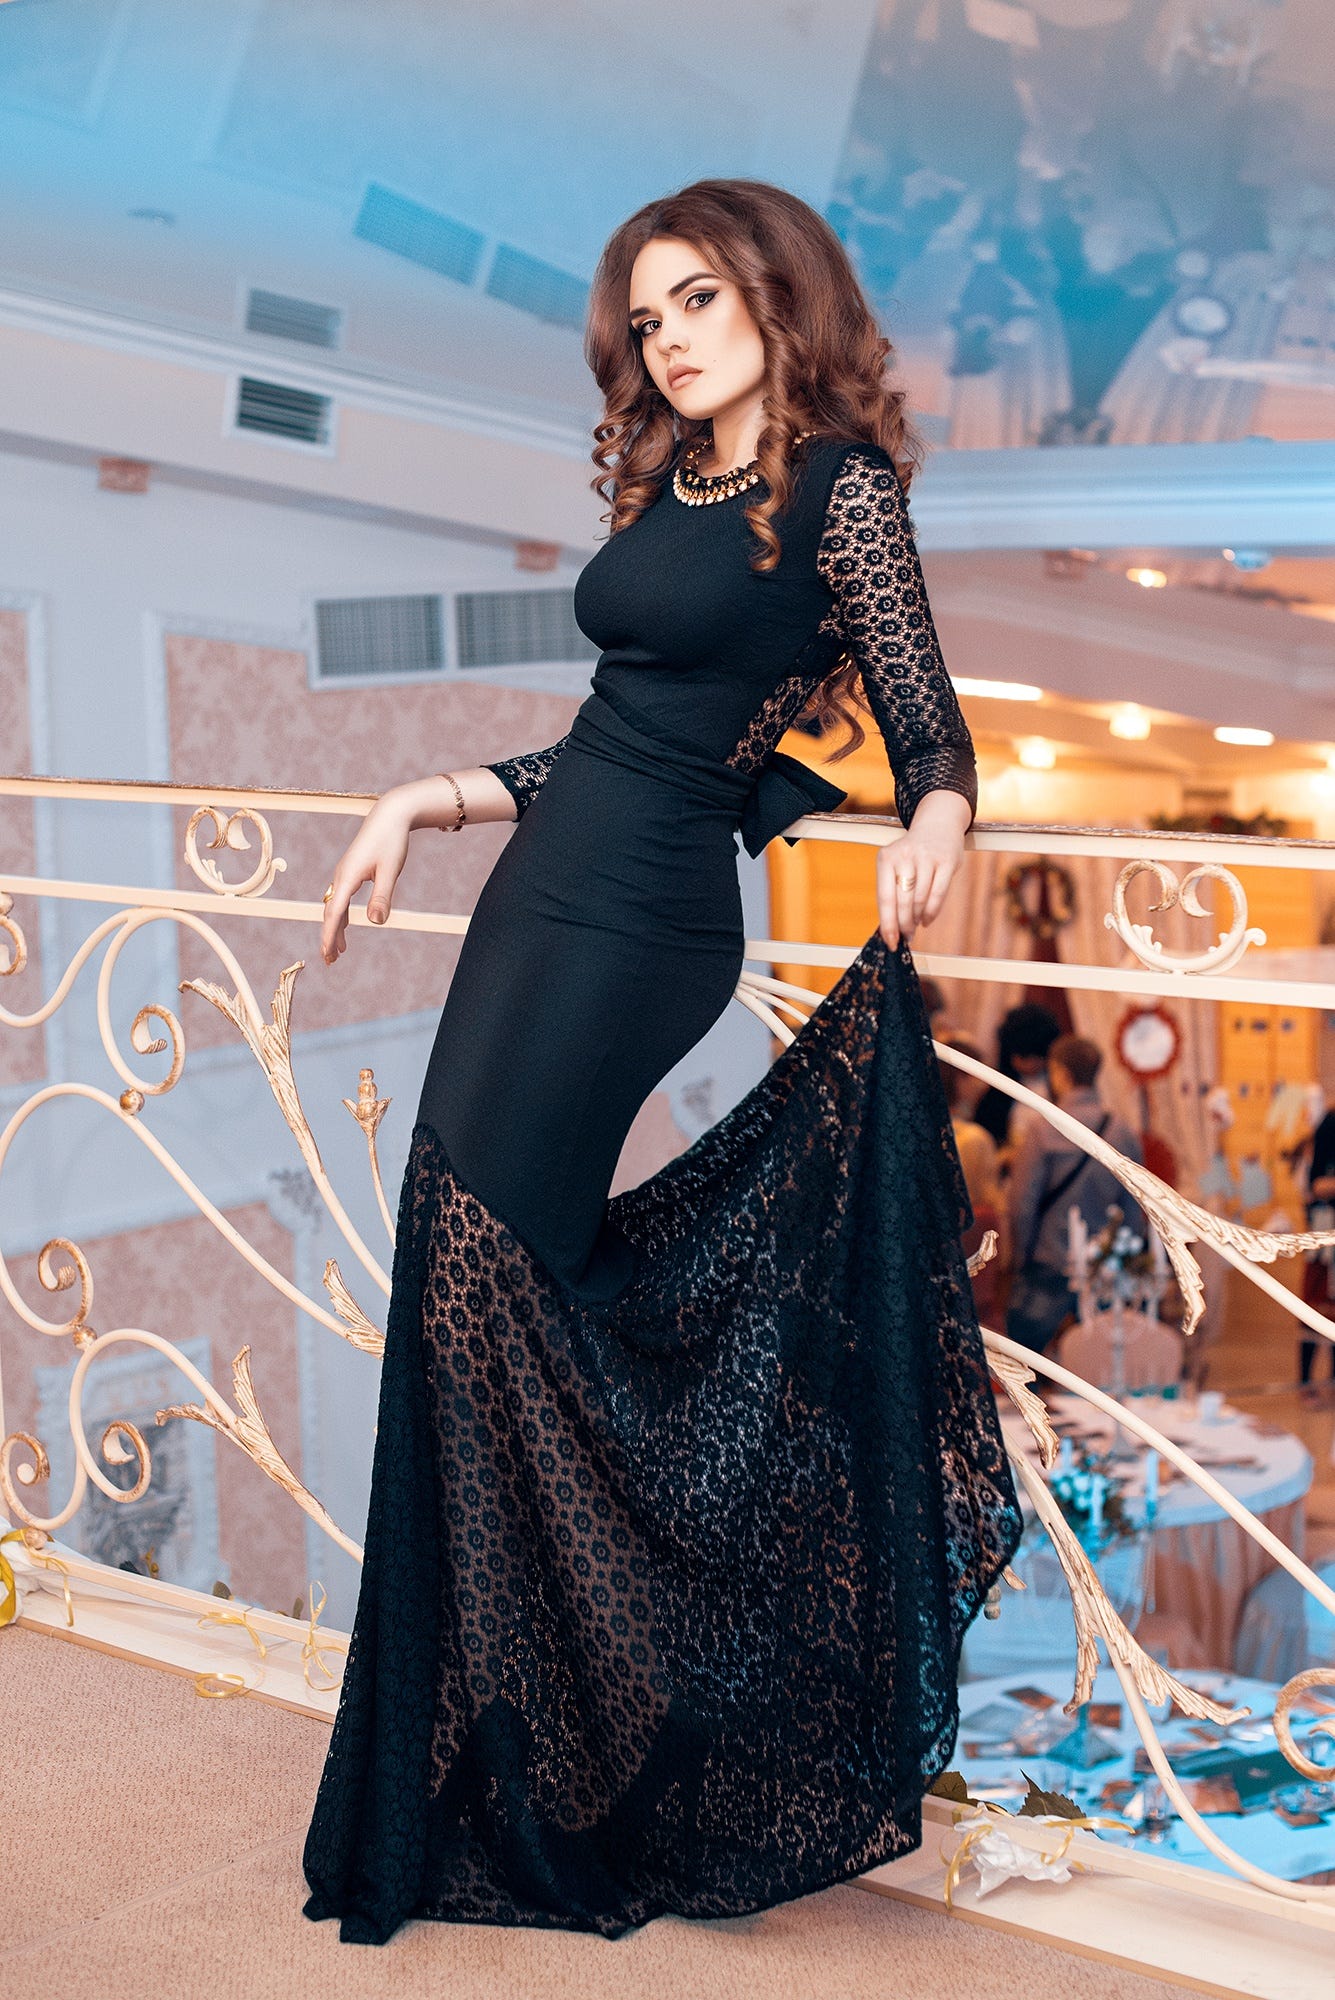 Ilya Novitsky Women Brunette Long Hair Wavy Hair Makeup Dress Black Clothing Balcony Fashion 1335x2000